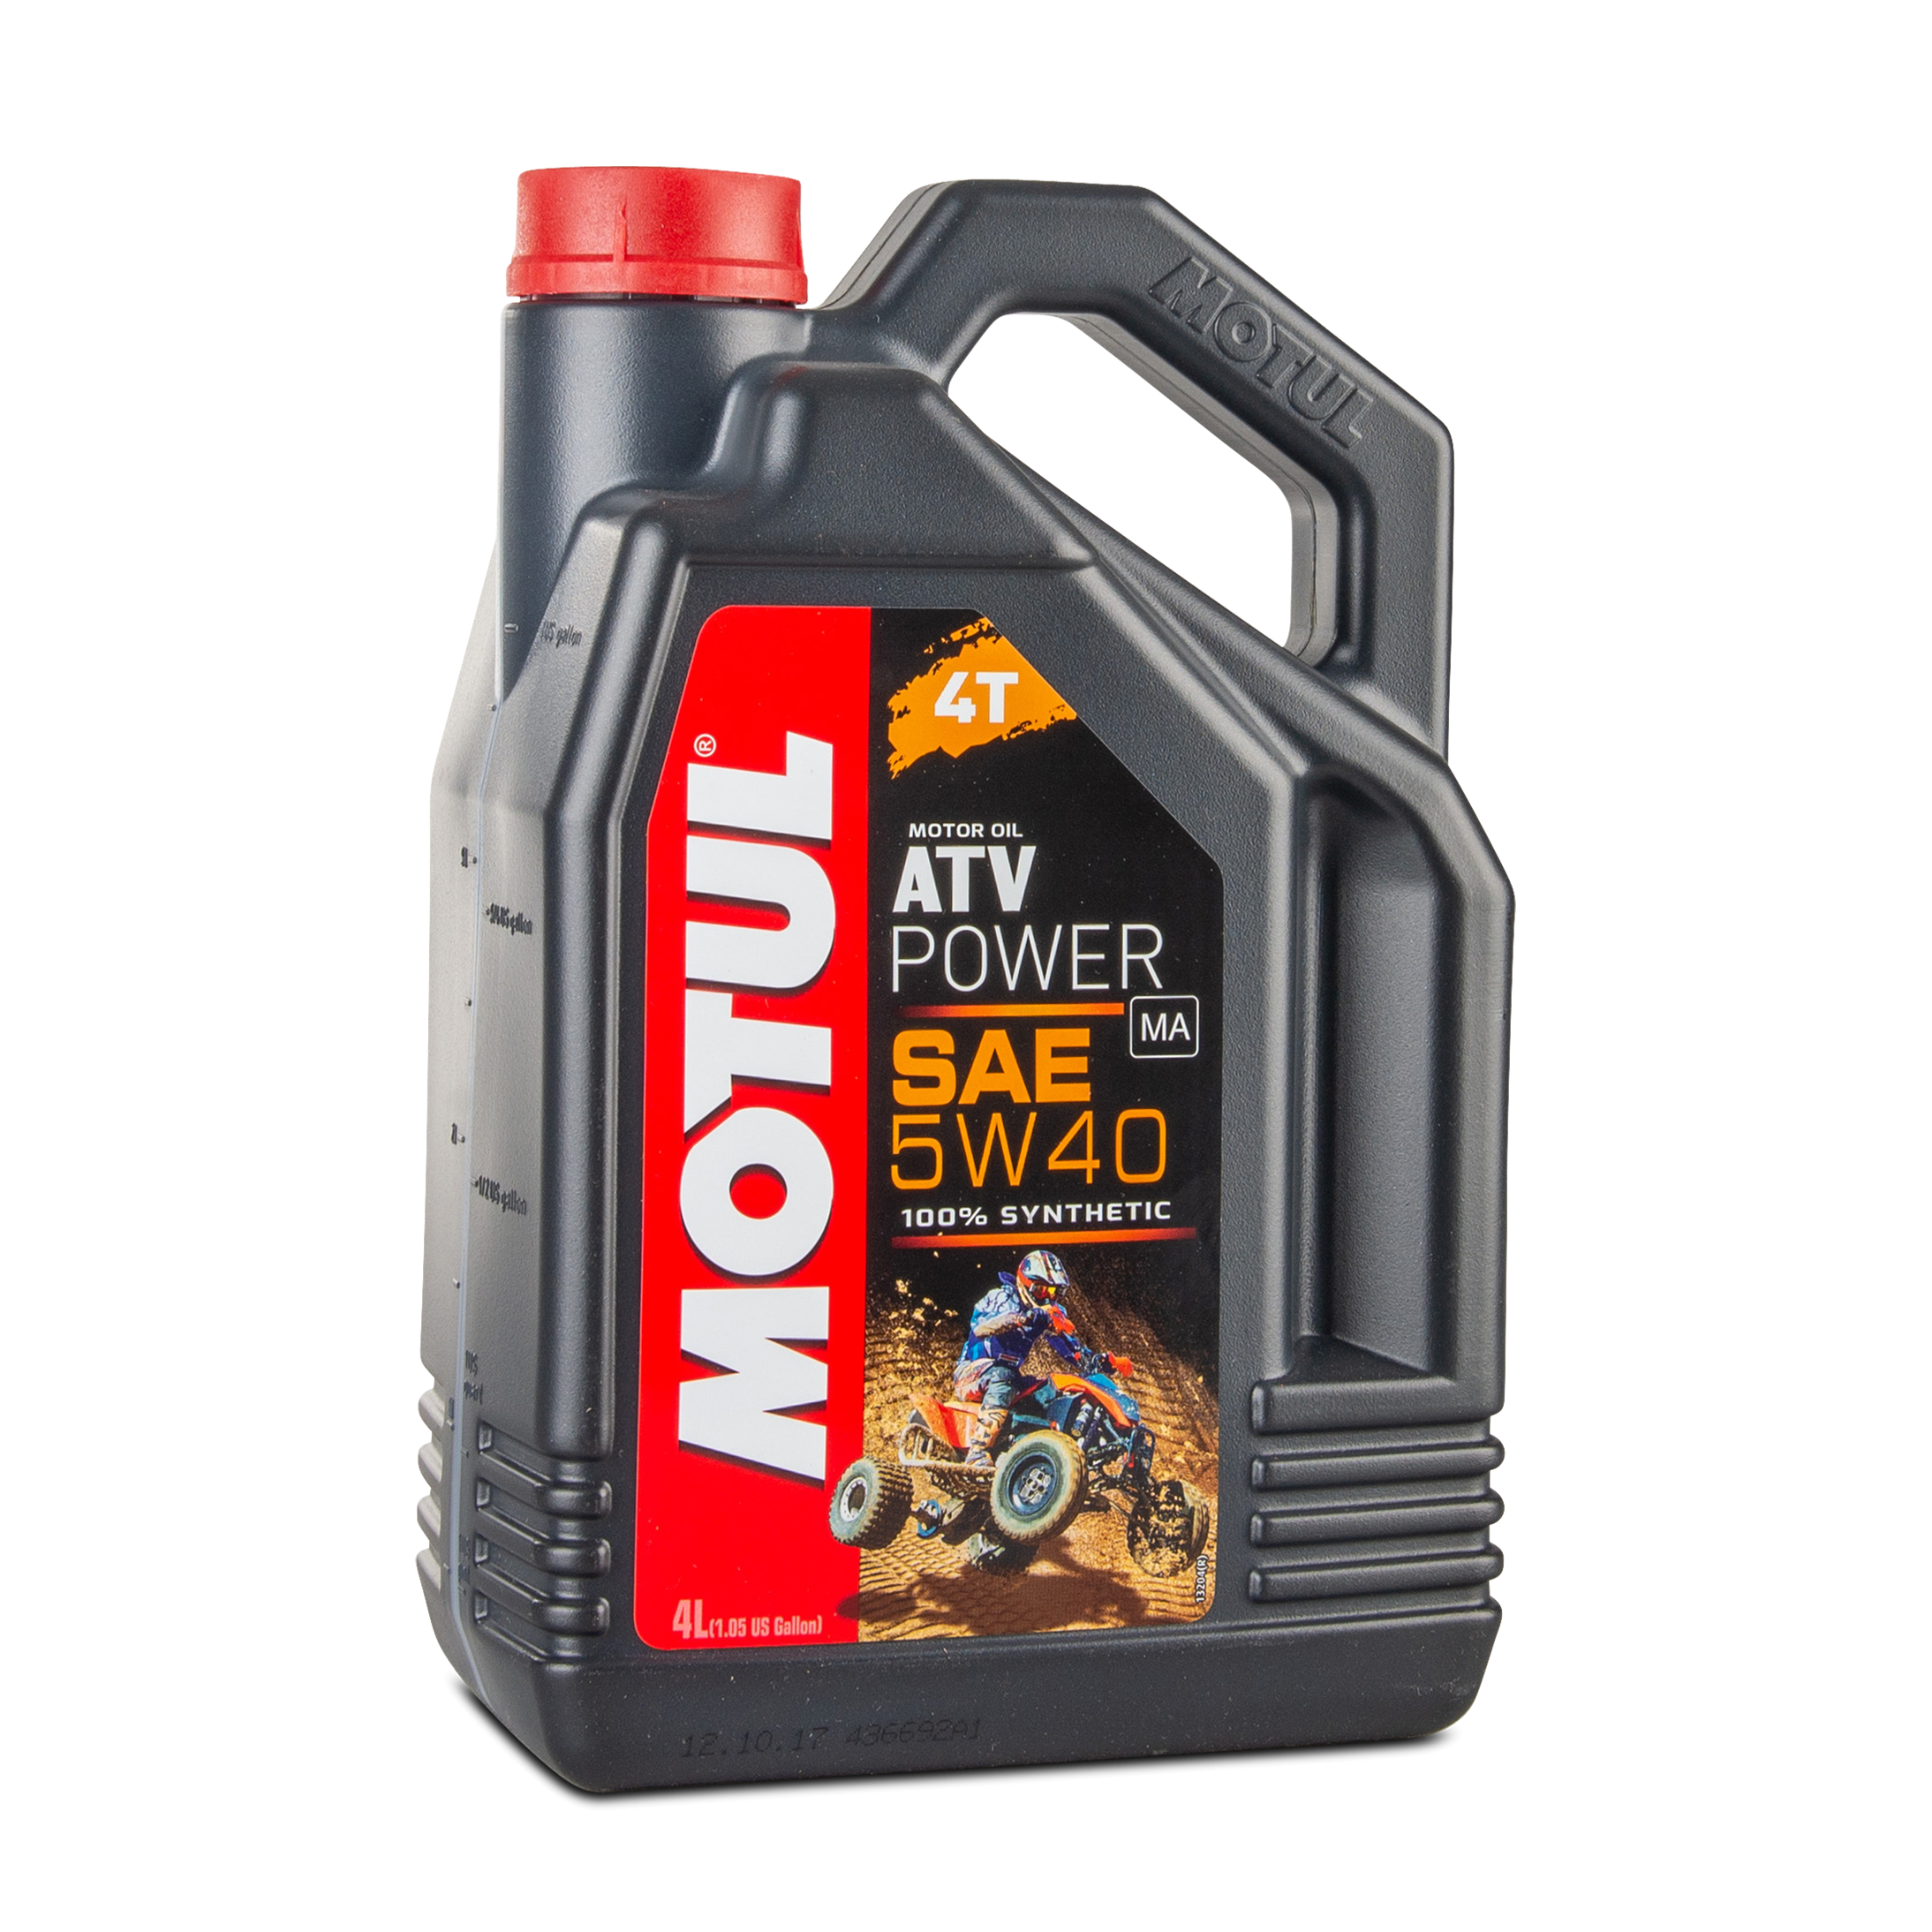 Motul ATV Power 5W40 4T Fully-Synthetic Oil 4L - Now 10% Savings